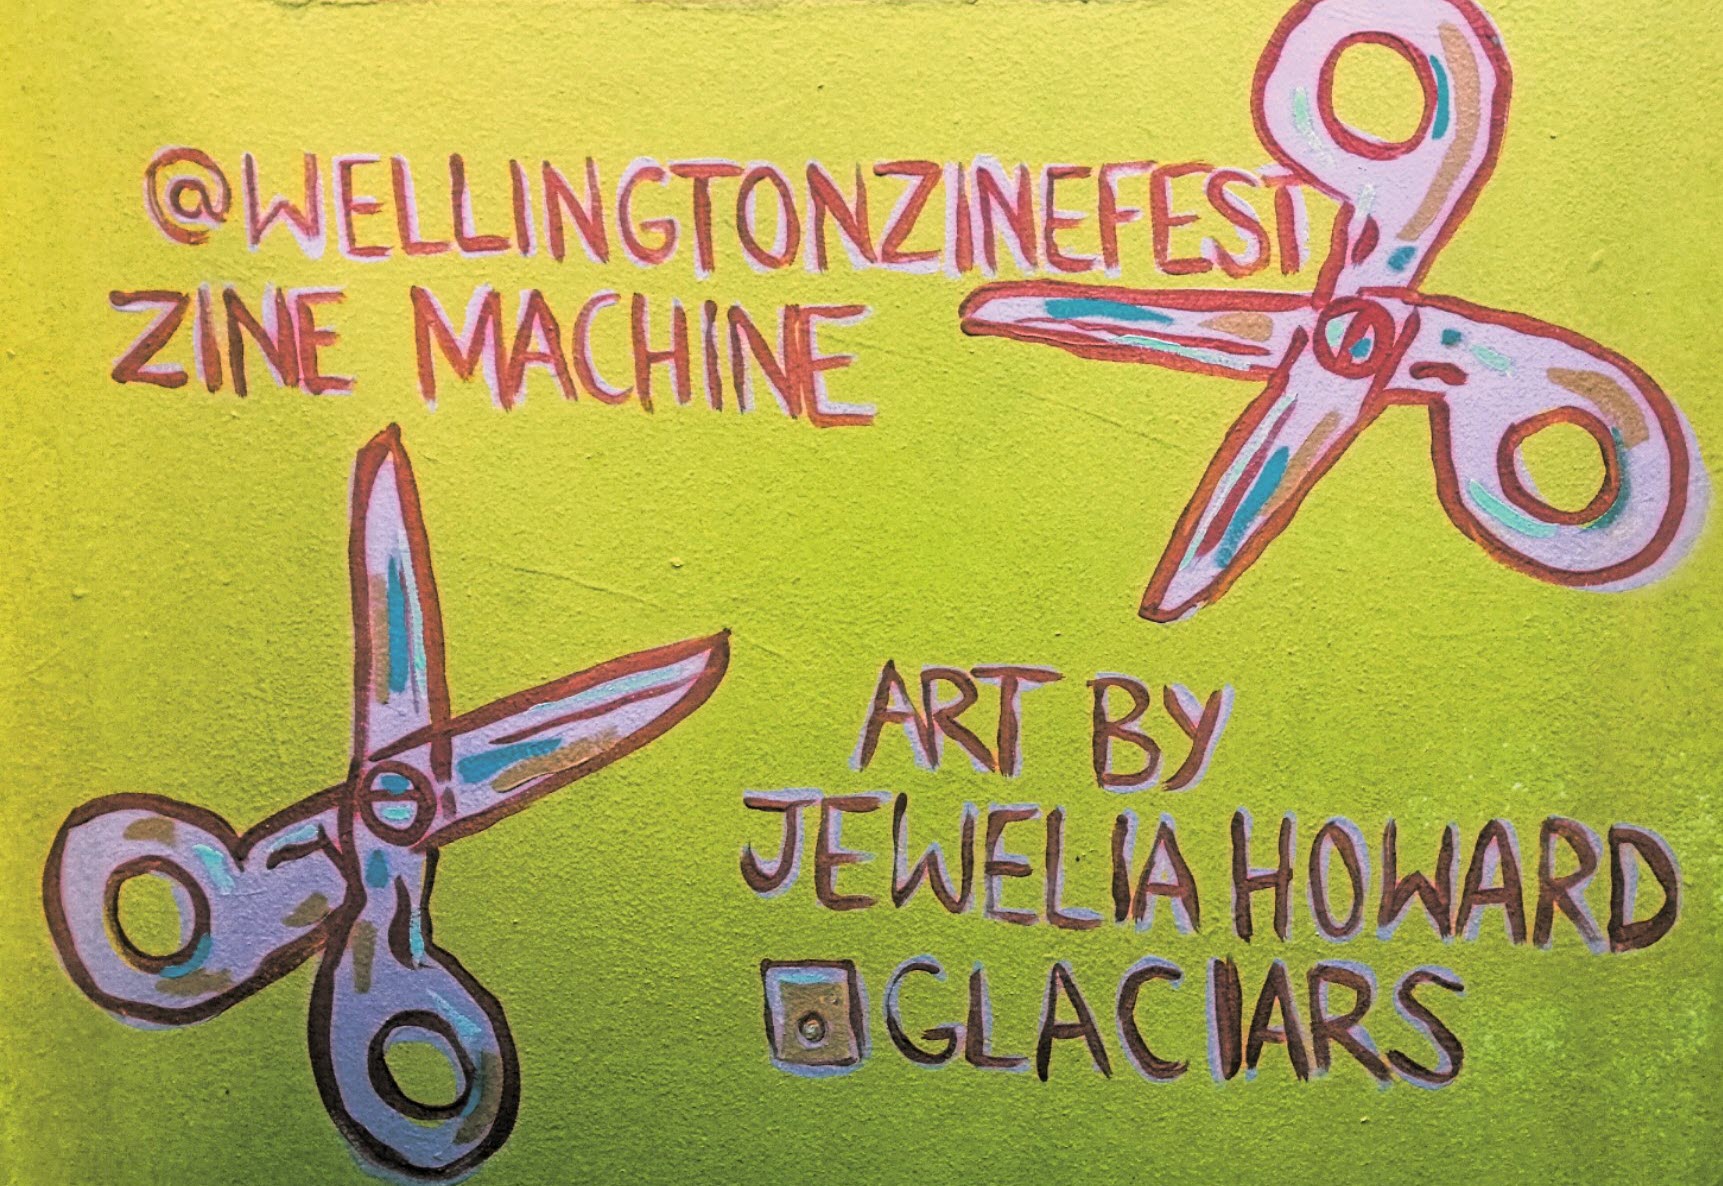 Art by Jewelia Howard Painted on zine machine